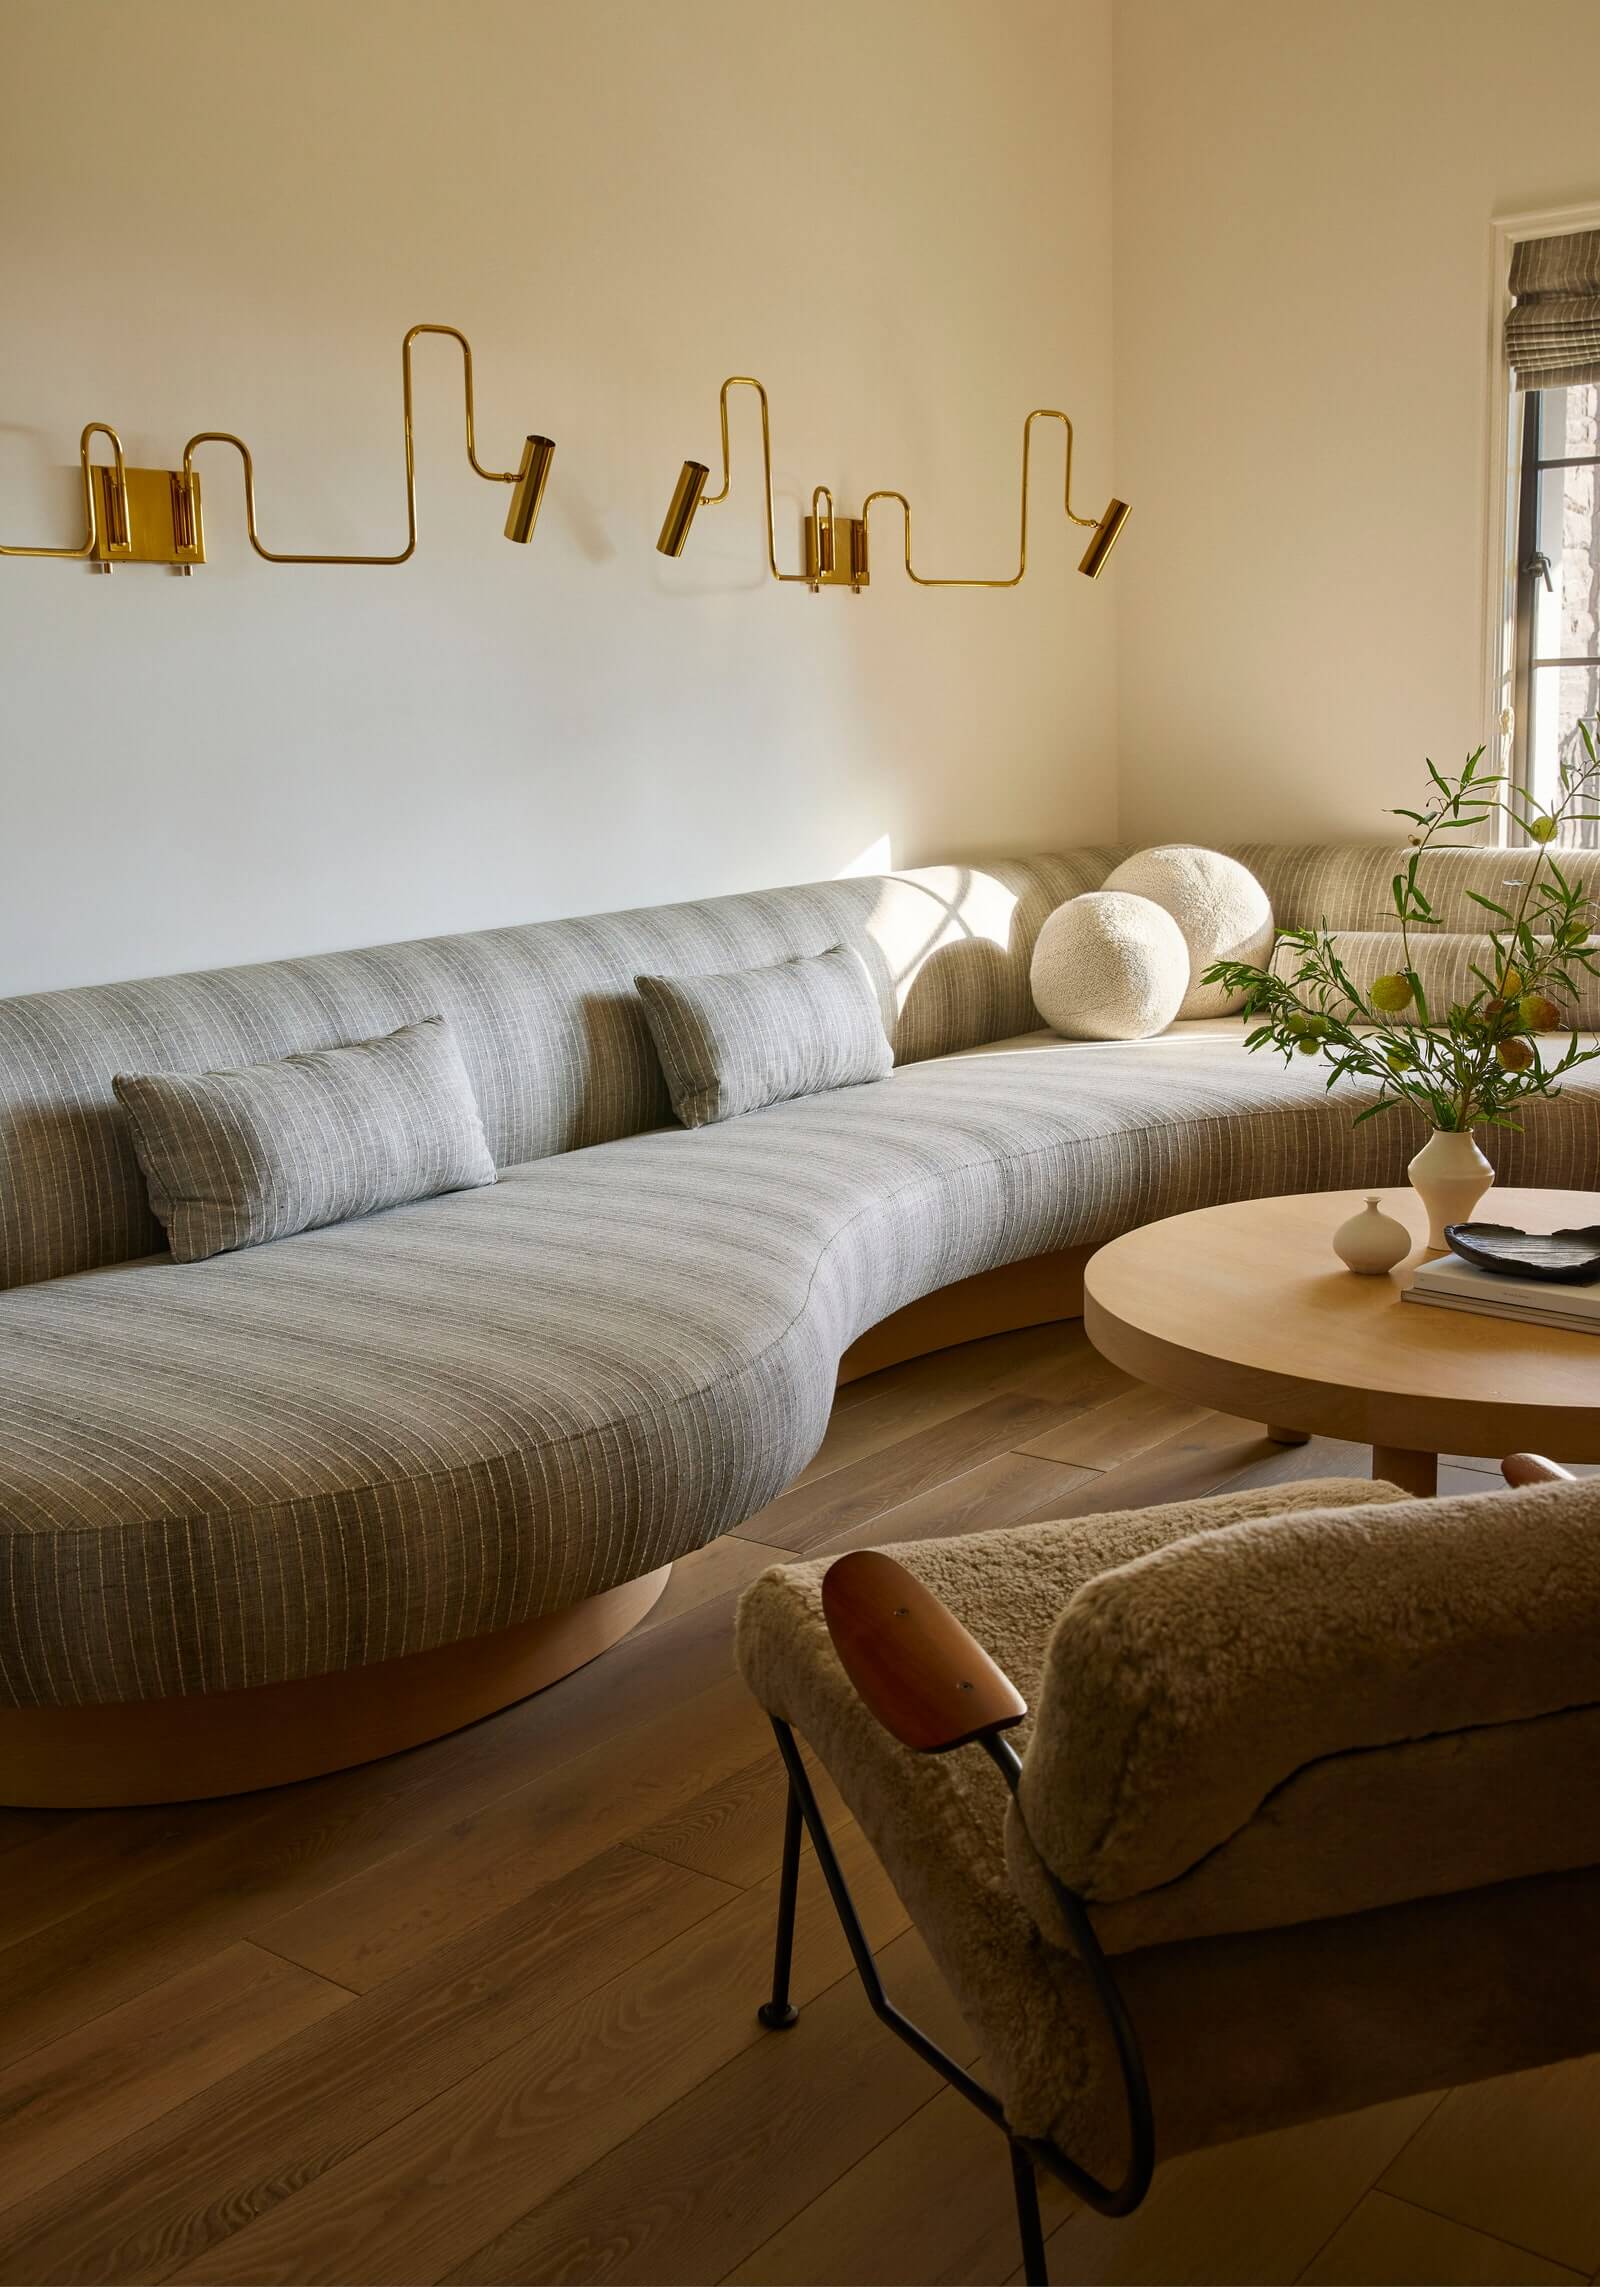 Gwyneth Paltrow's home with holistic interior design